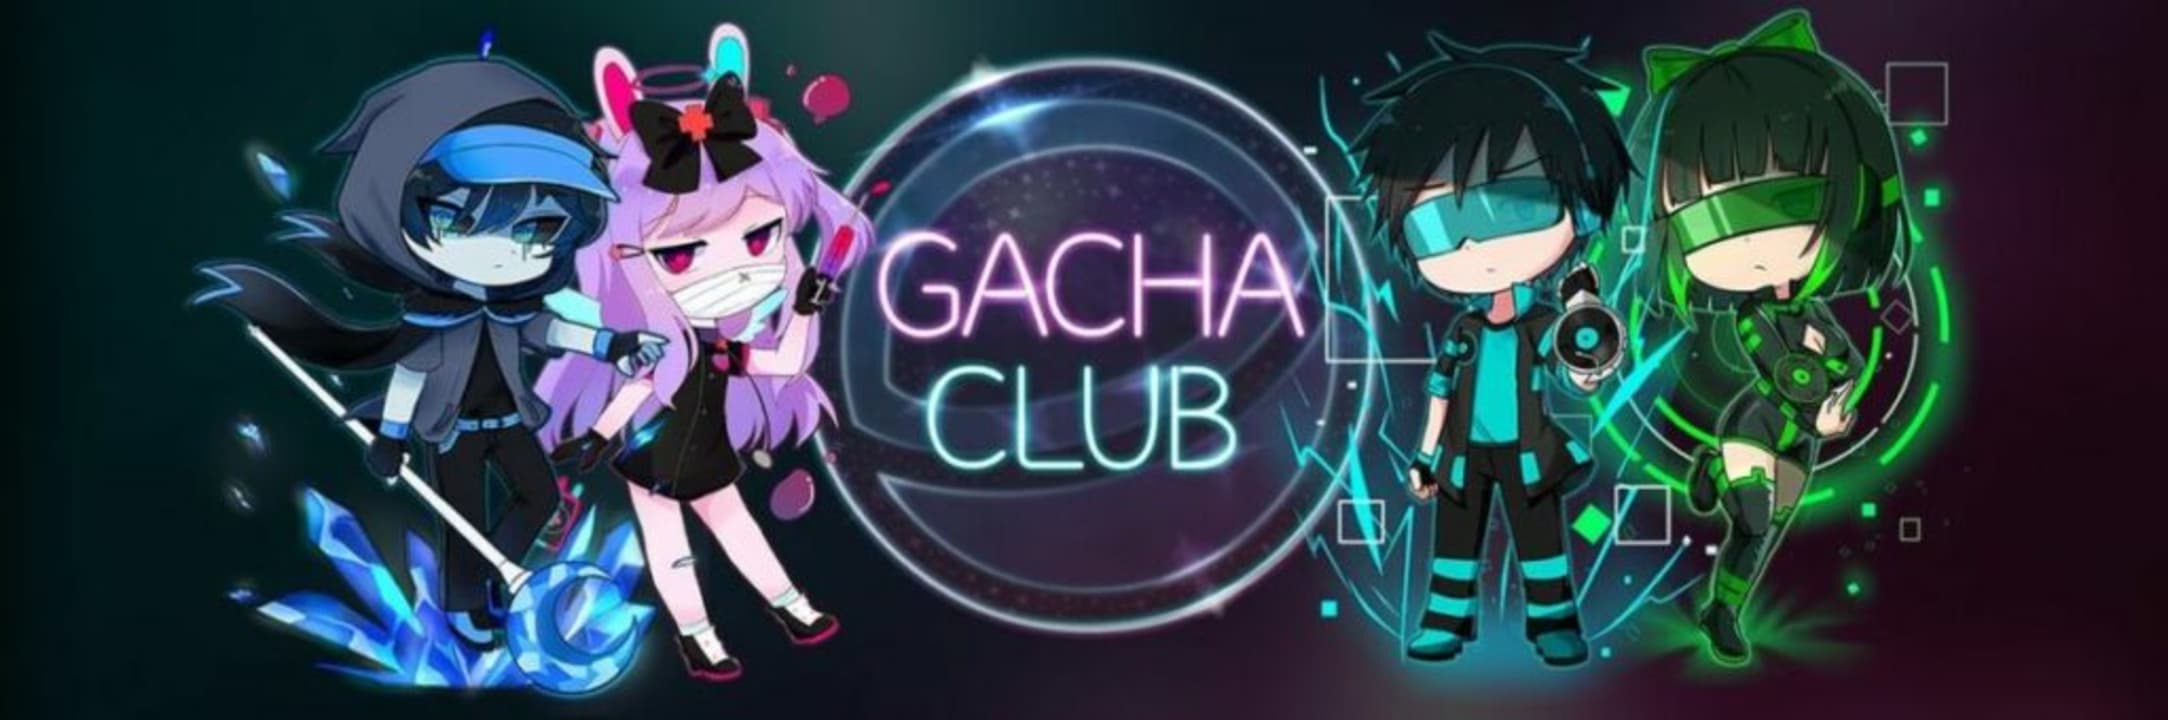 Gacha Club logo and avatars examples